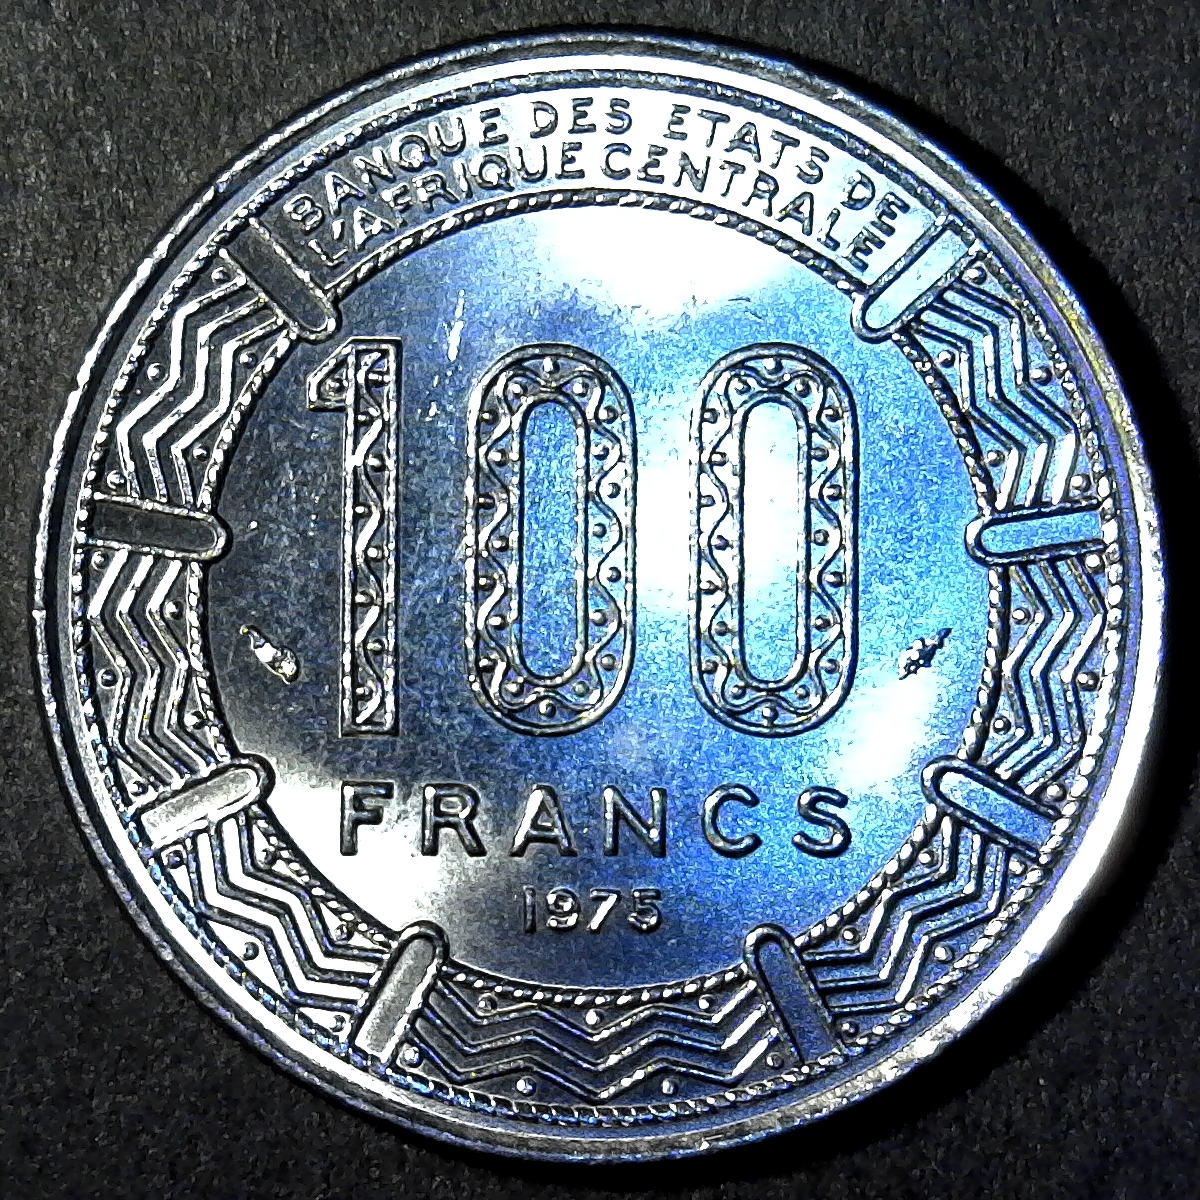 Congo 1975 100 Francs 1975 obverse.jpg